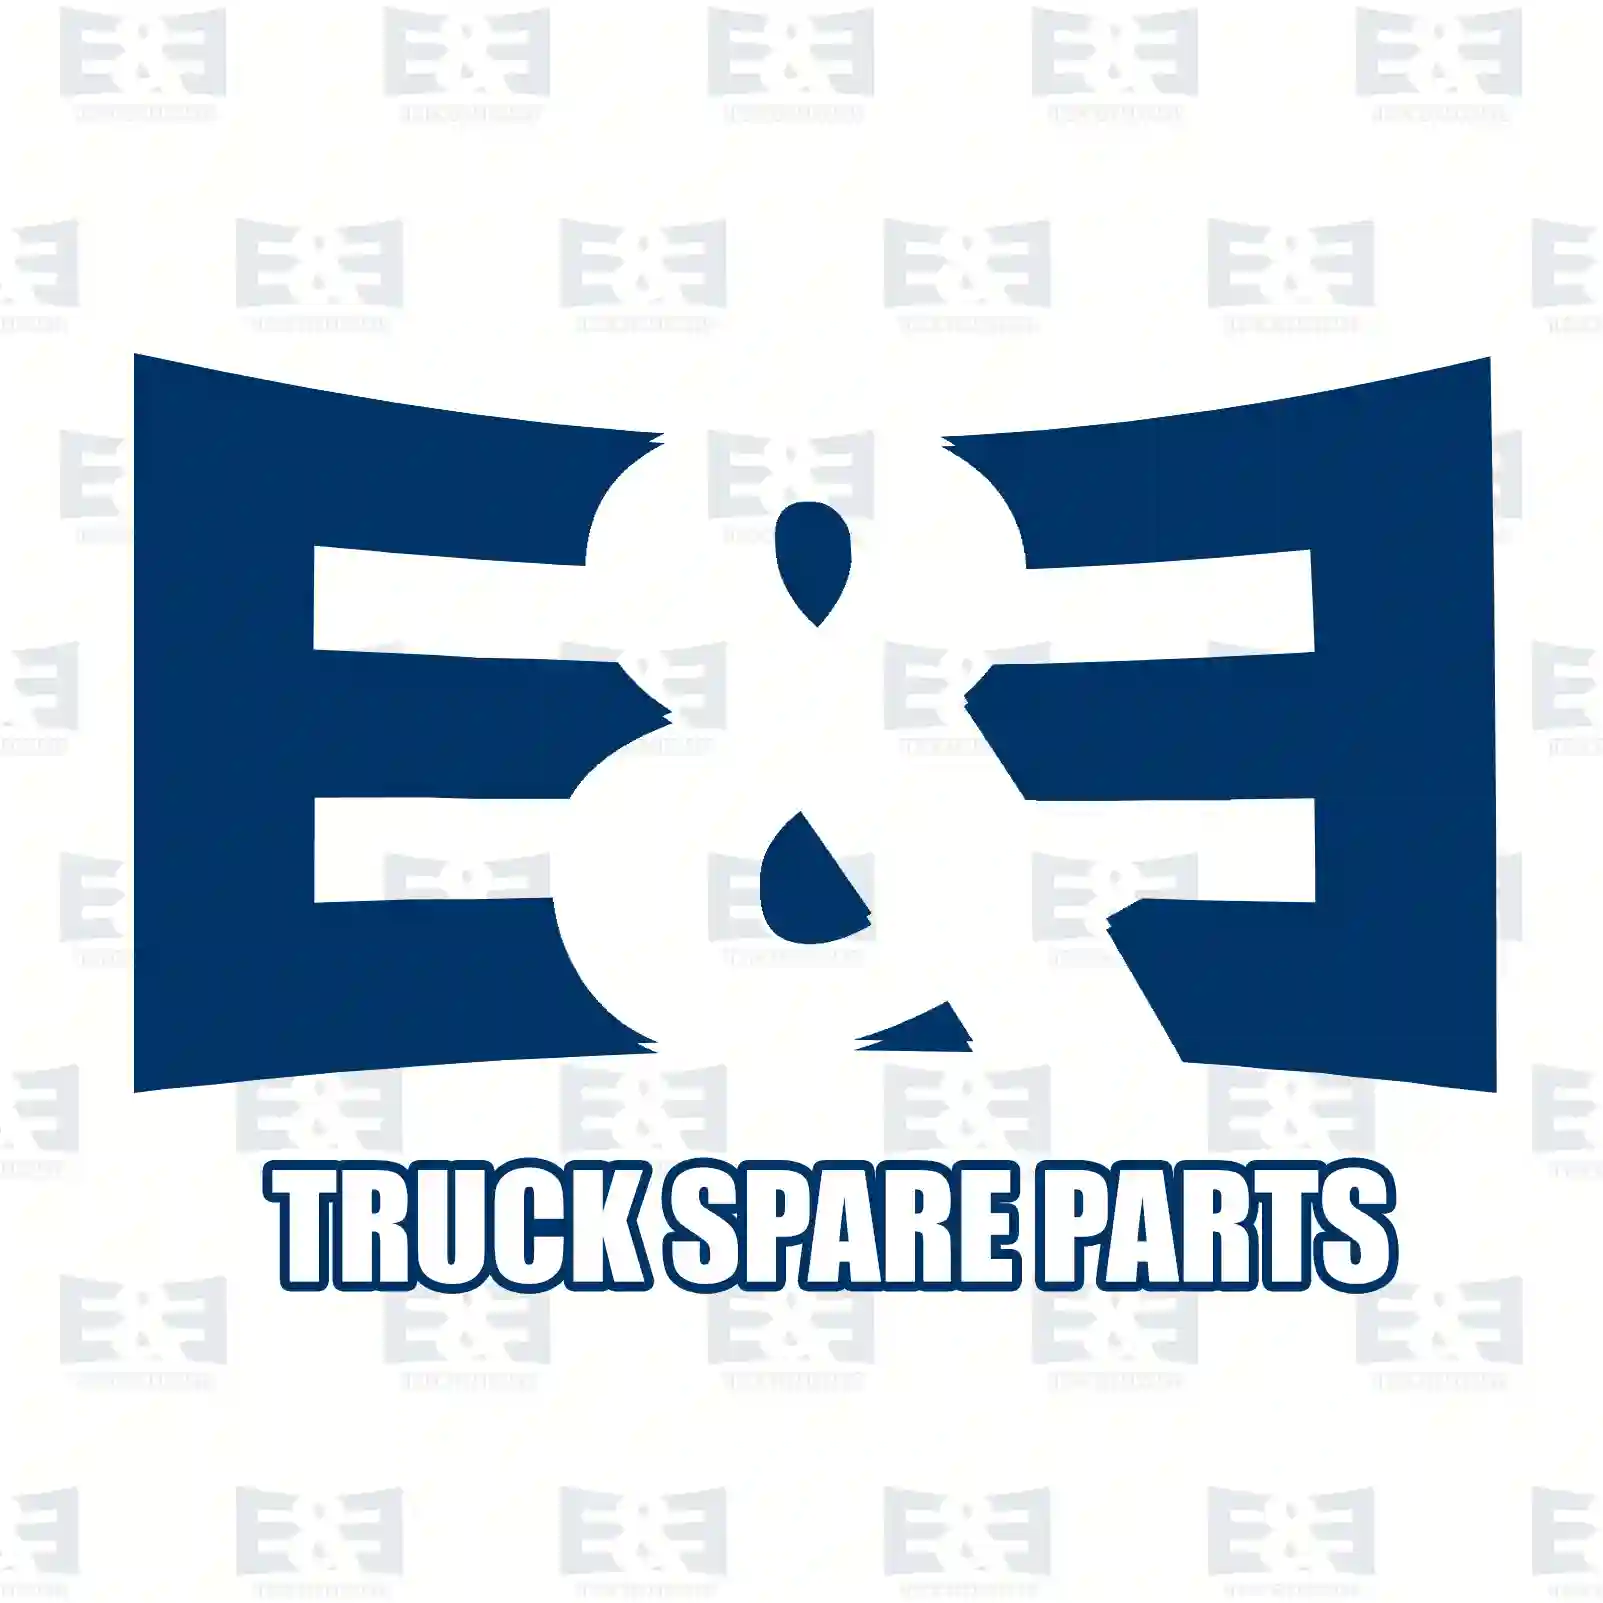 Load sensitive valve, 2E2294638, 1506229, 1506229A, 5811045 ||  2E2294638 E&E Truck Spare Parts | Truck Spare Parts, Auotomotive Spare Parts Load sensitive valve, 2E2294638, 1506229, 1506229A, 5811045 ||  2E2294638 E&E Truck Spare Parts | Truck Spare Parts, Auotomotive Spare Parts